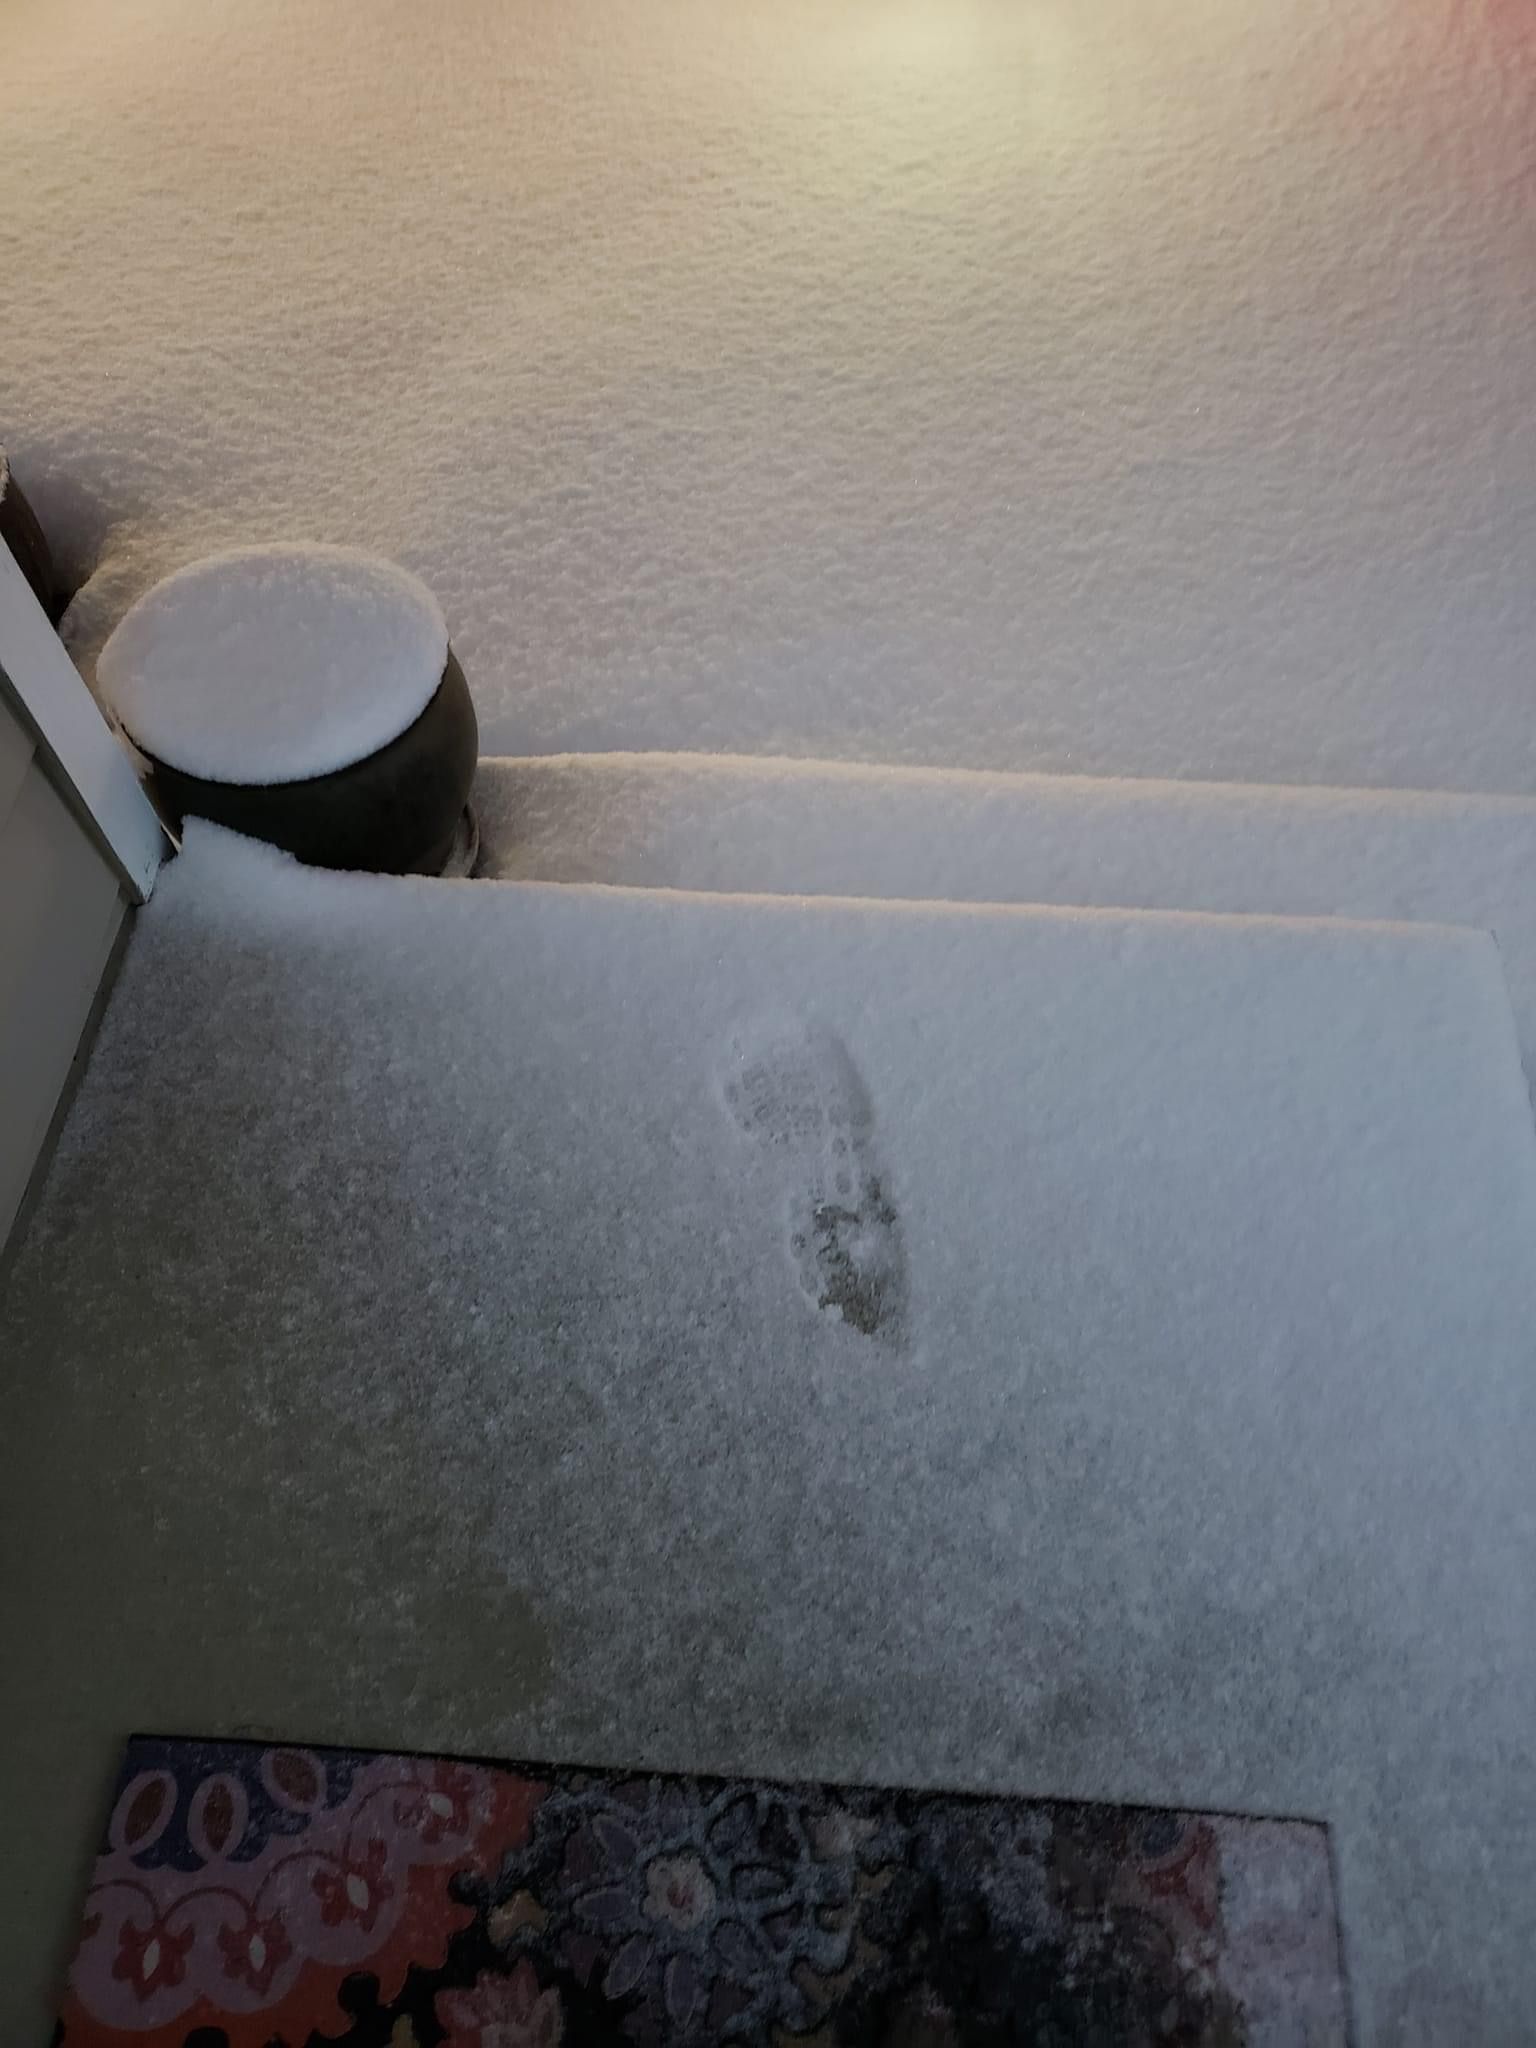 The Footprint